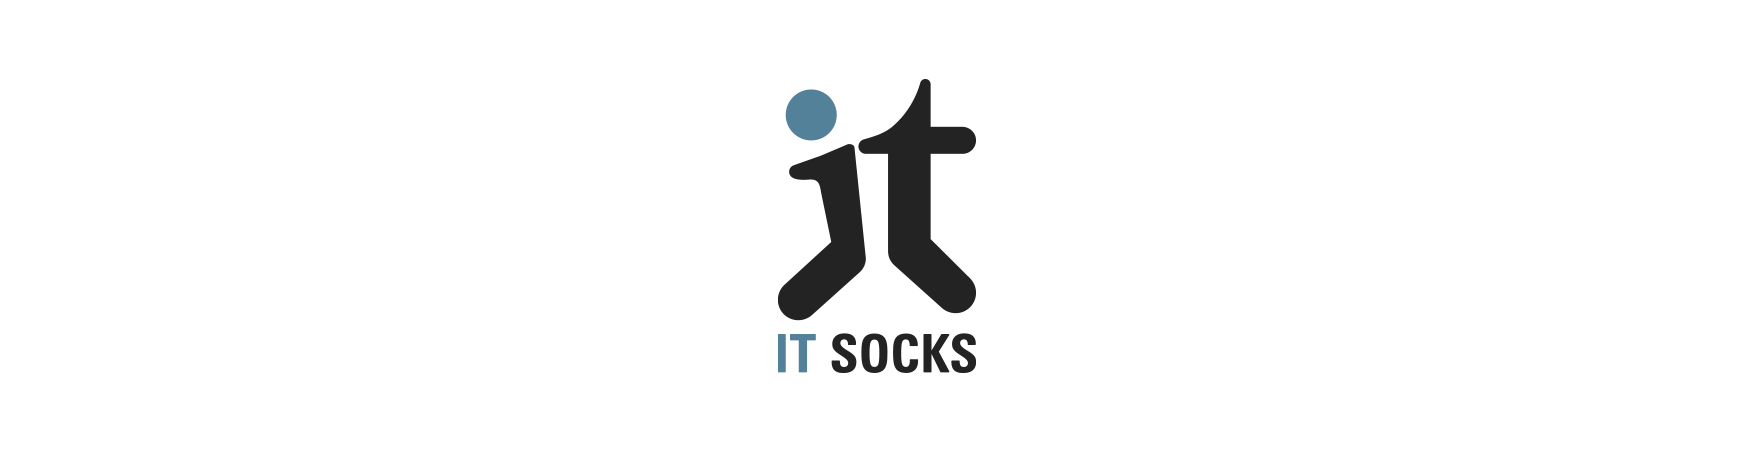 IT Socks